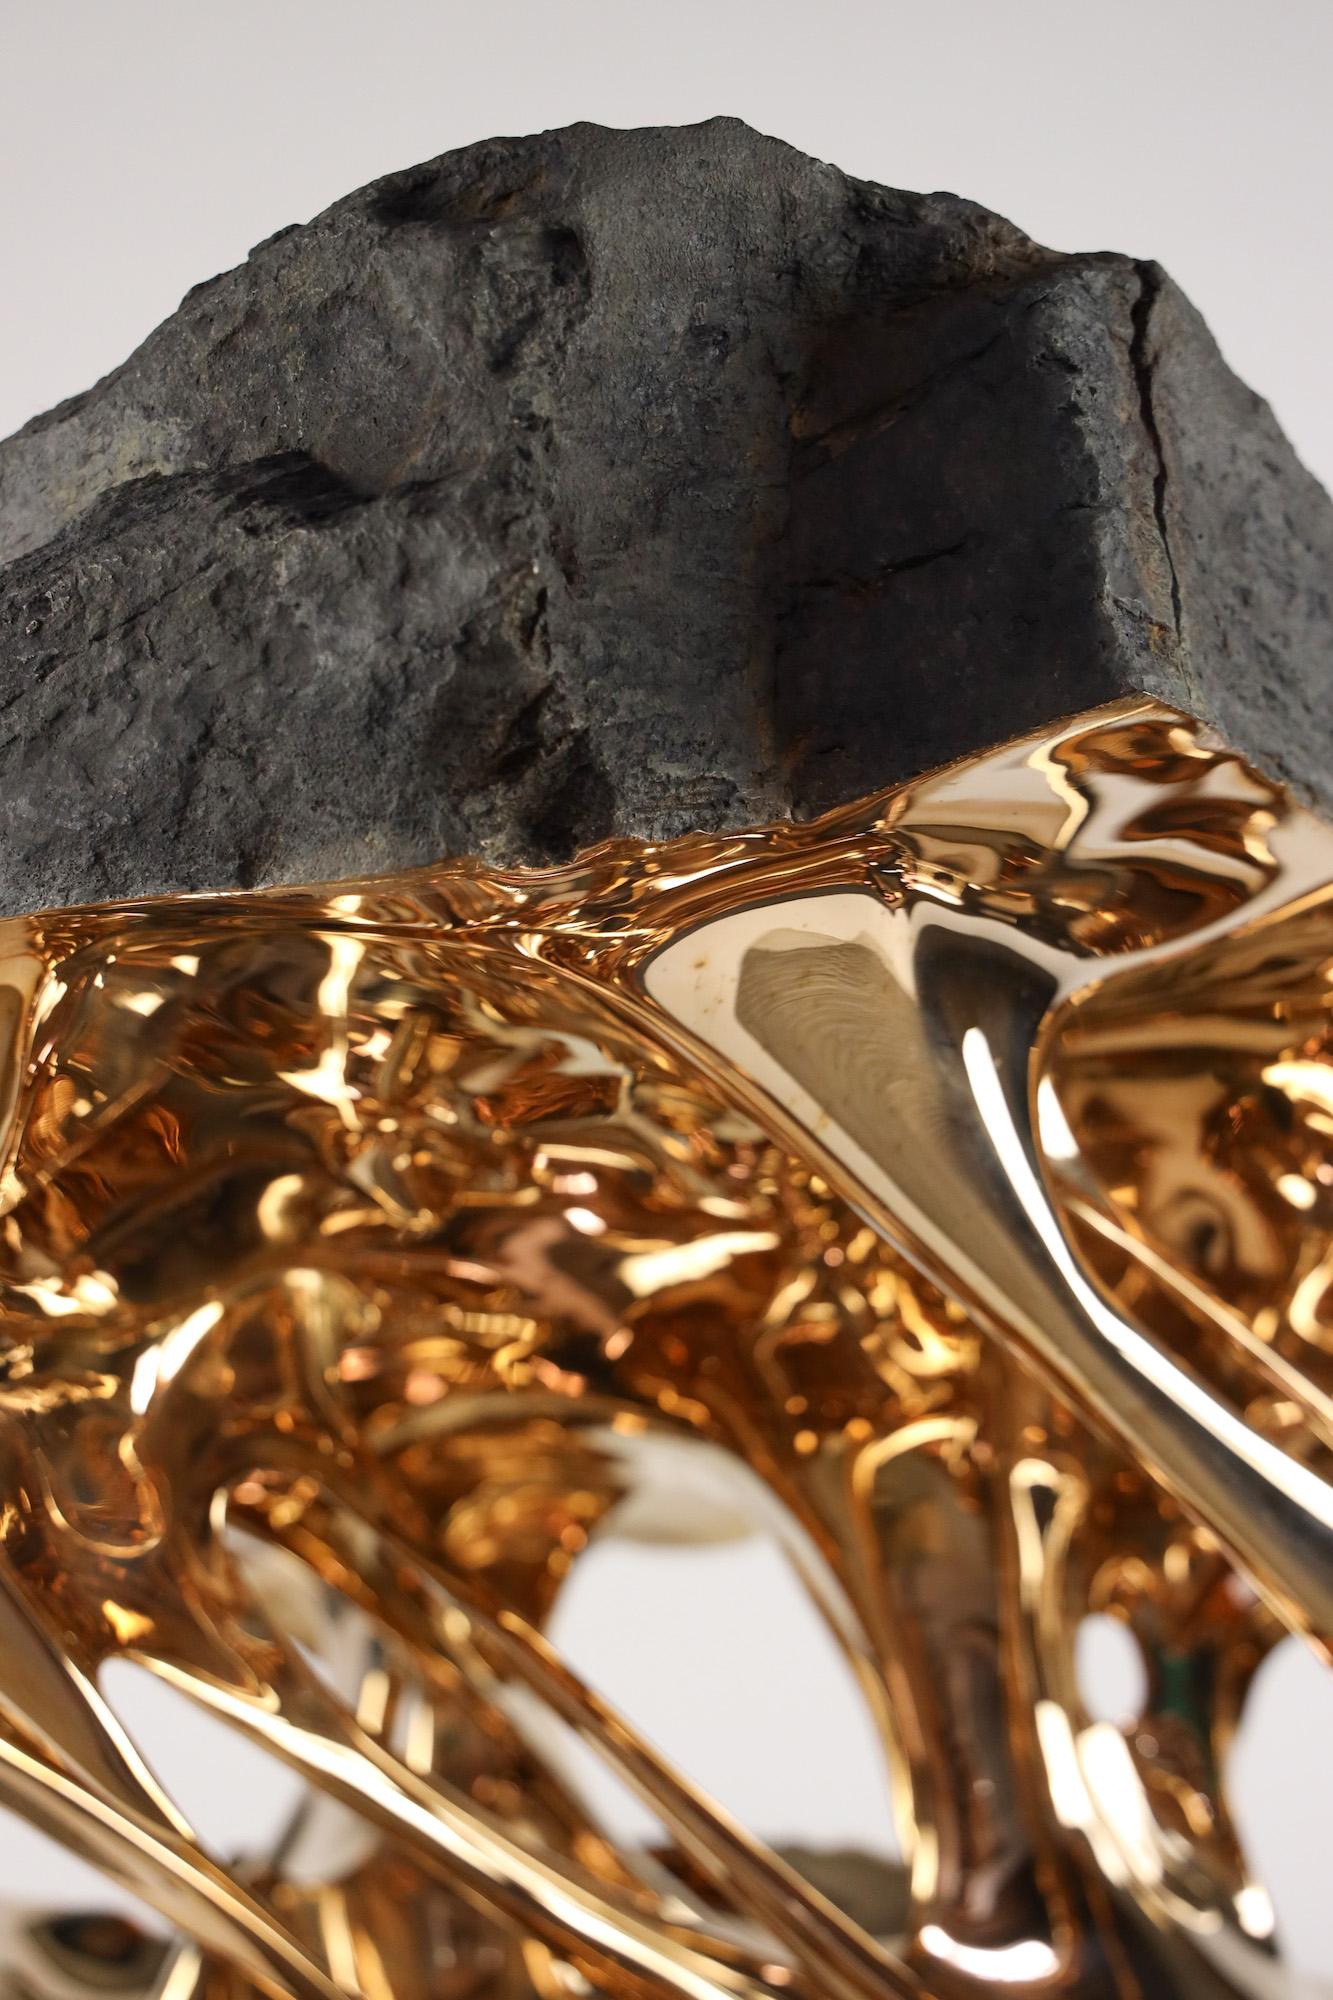 Gaïa by Romain Langlois - Rock-like bronze sculpture, golden, abstract For Sale 10